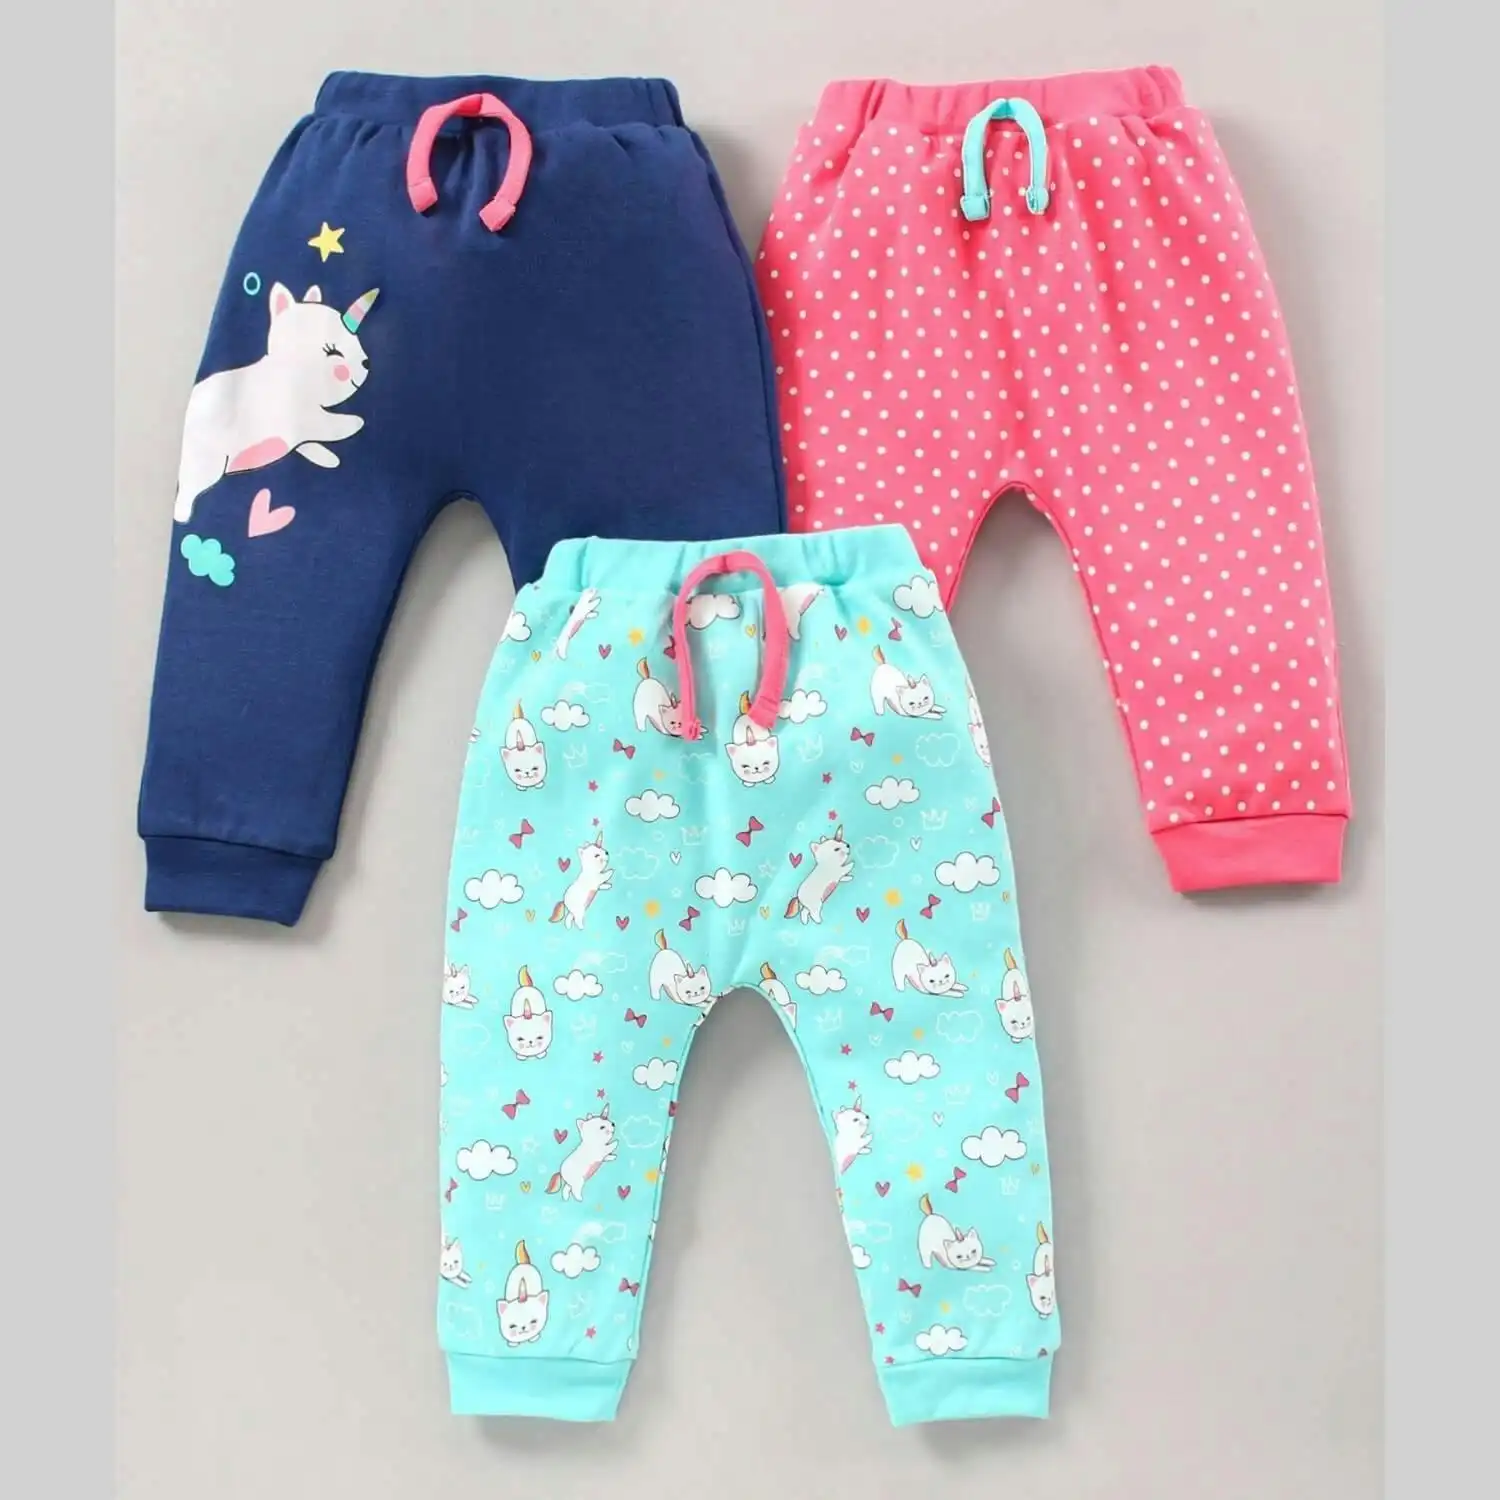 BabiesMart 3 Pack Unisex New Born Baby Clothes Pyjama Bottoms